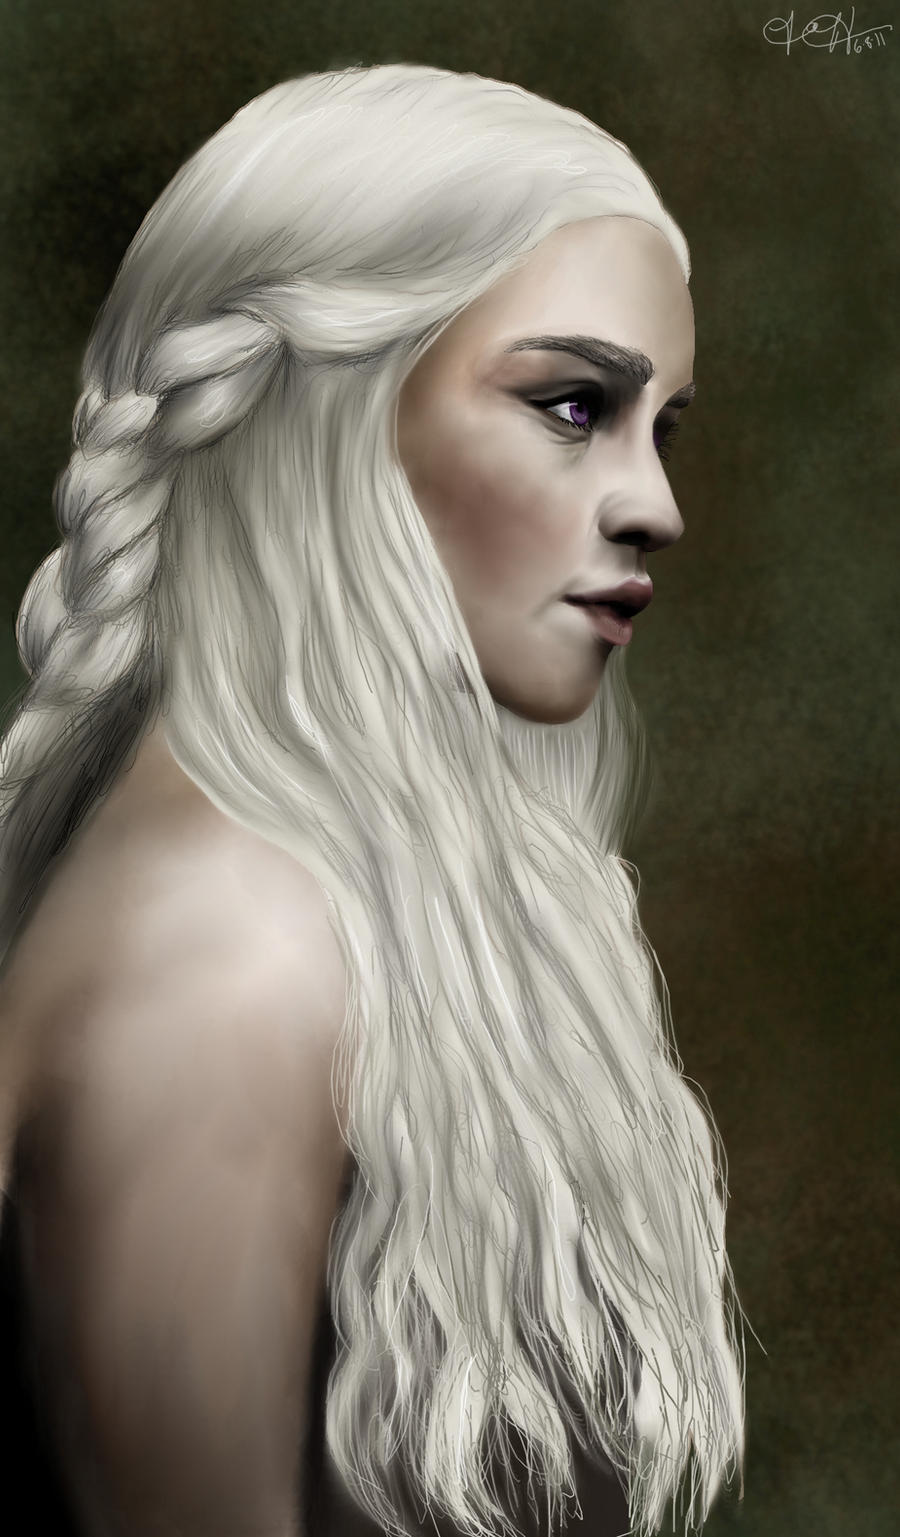 Valyrian.